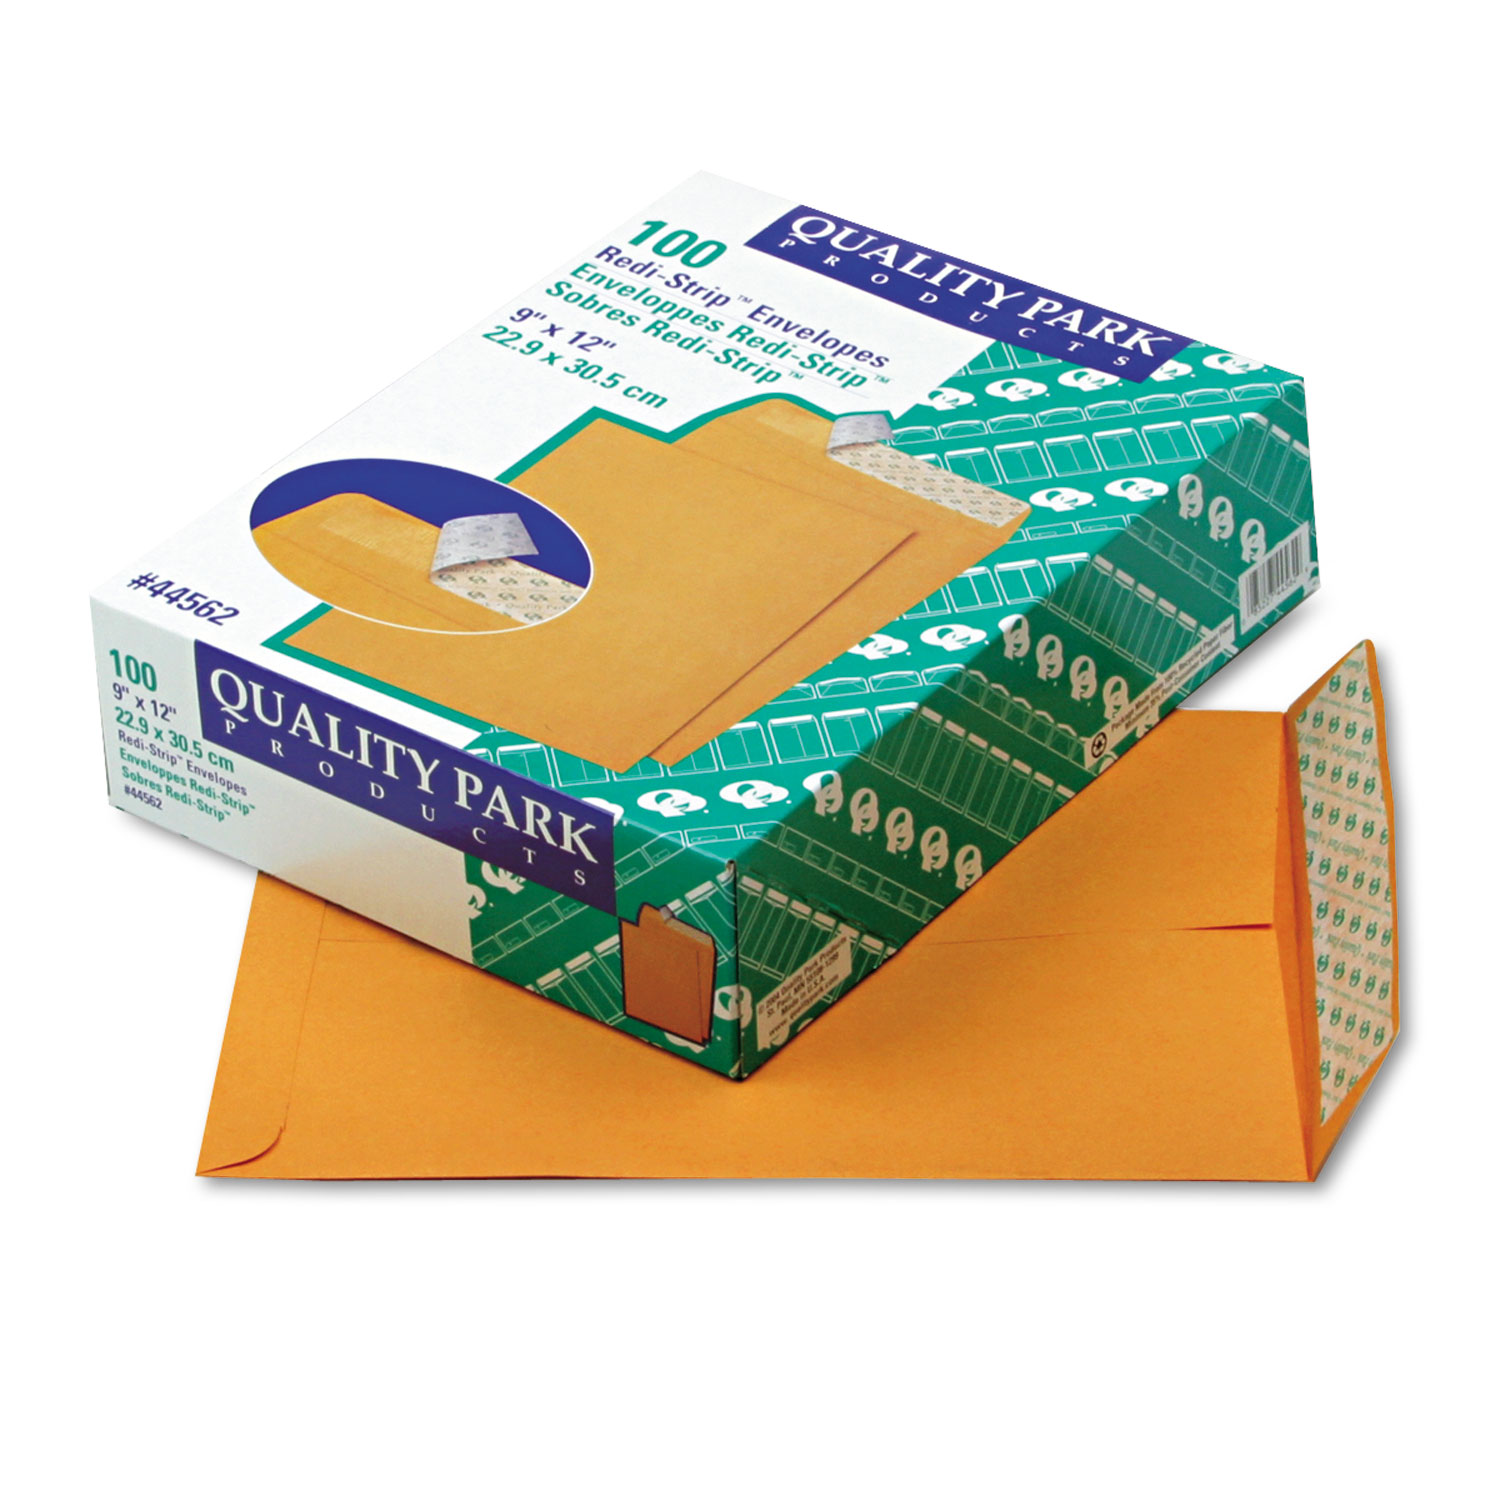  Quality Park QUA44562 Redi-Strip Catalog Envelope, #10 1/2, Cheese Blade Flap, Redi-Strip Closure, 9 x 12, Brown Kraft, 100/Box (QUA44562) 